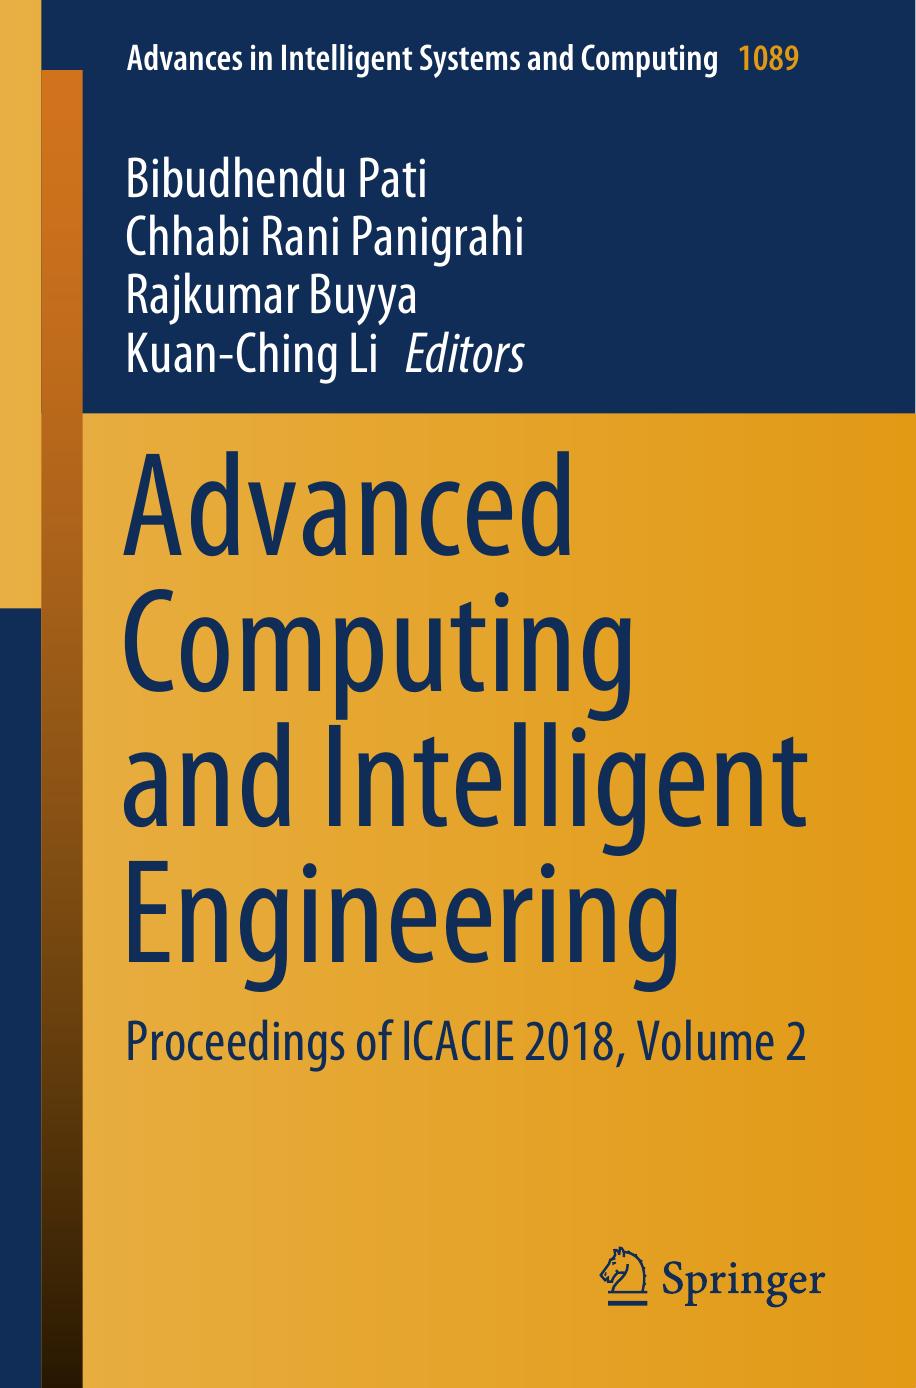 Advanced Computing and Intelligent Engineering: Proceedings of ICACIE 2018, Volume 2